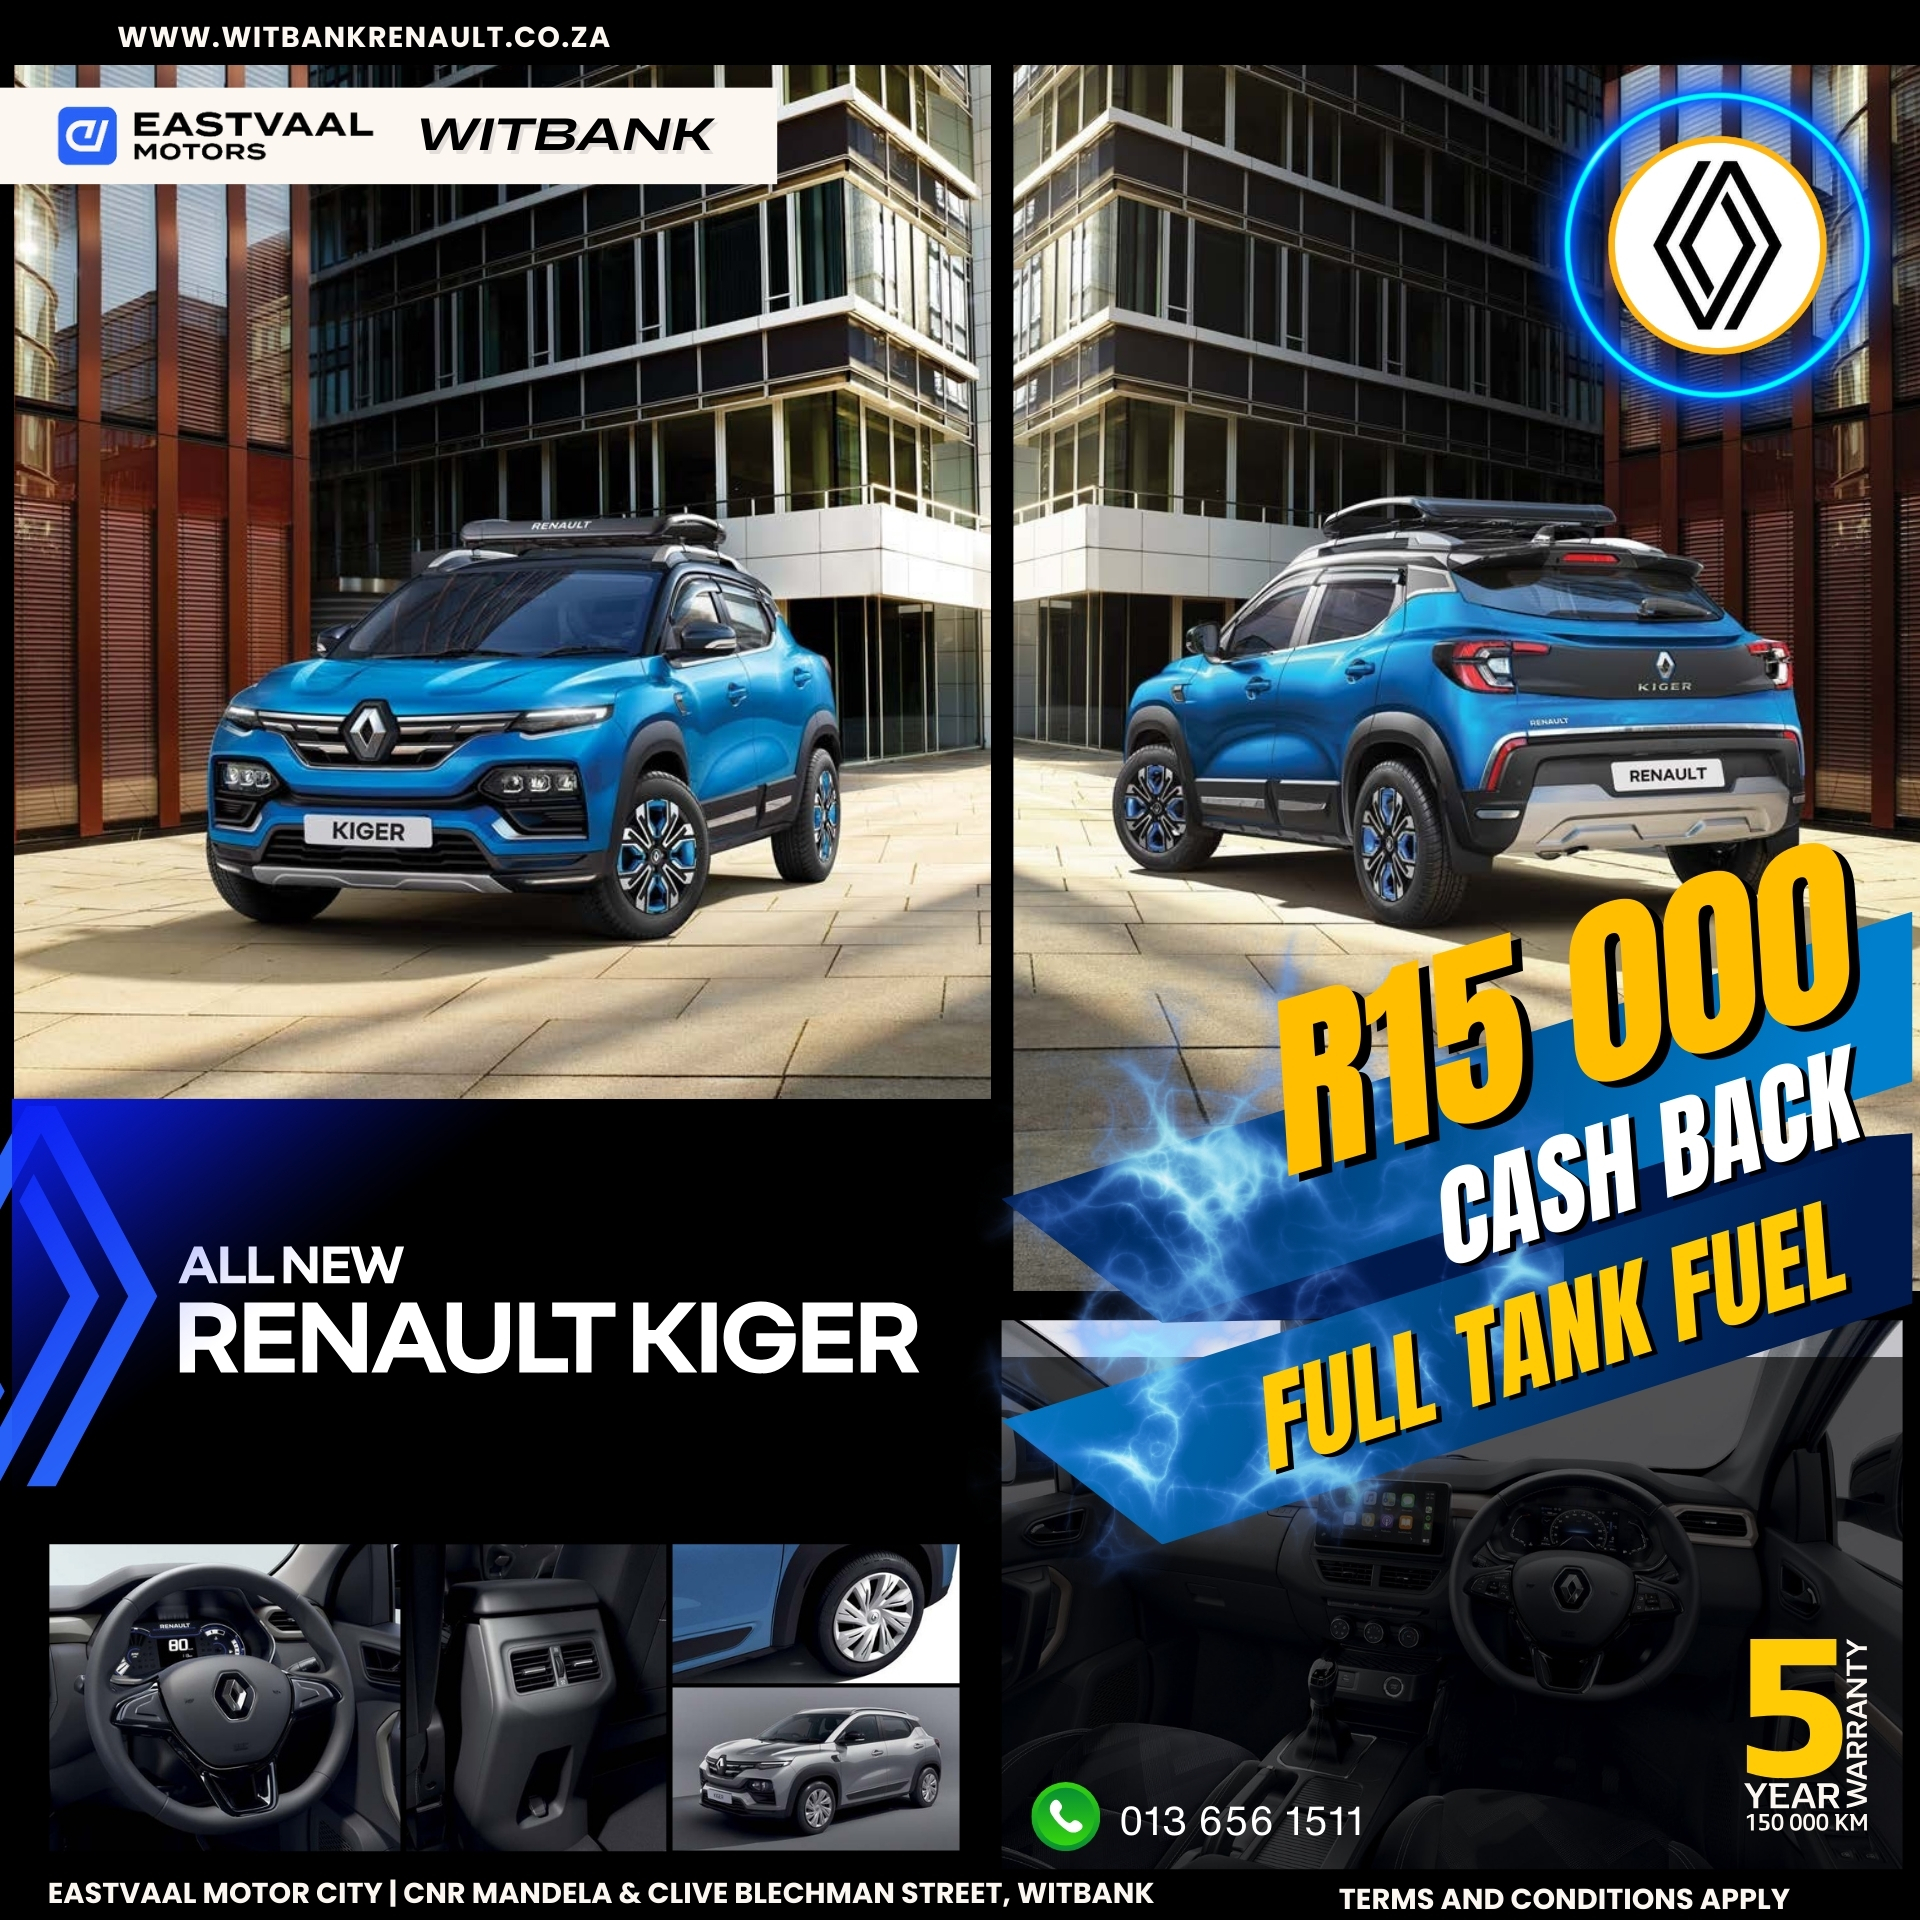 Renault Kiger image from Eastvaal Motors